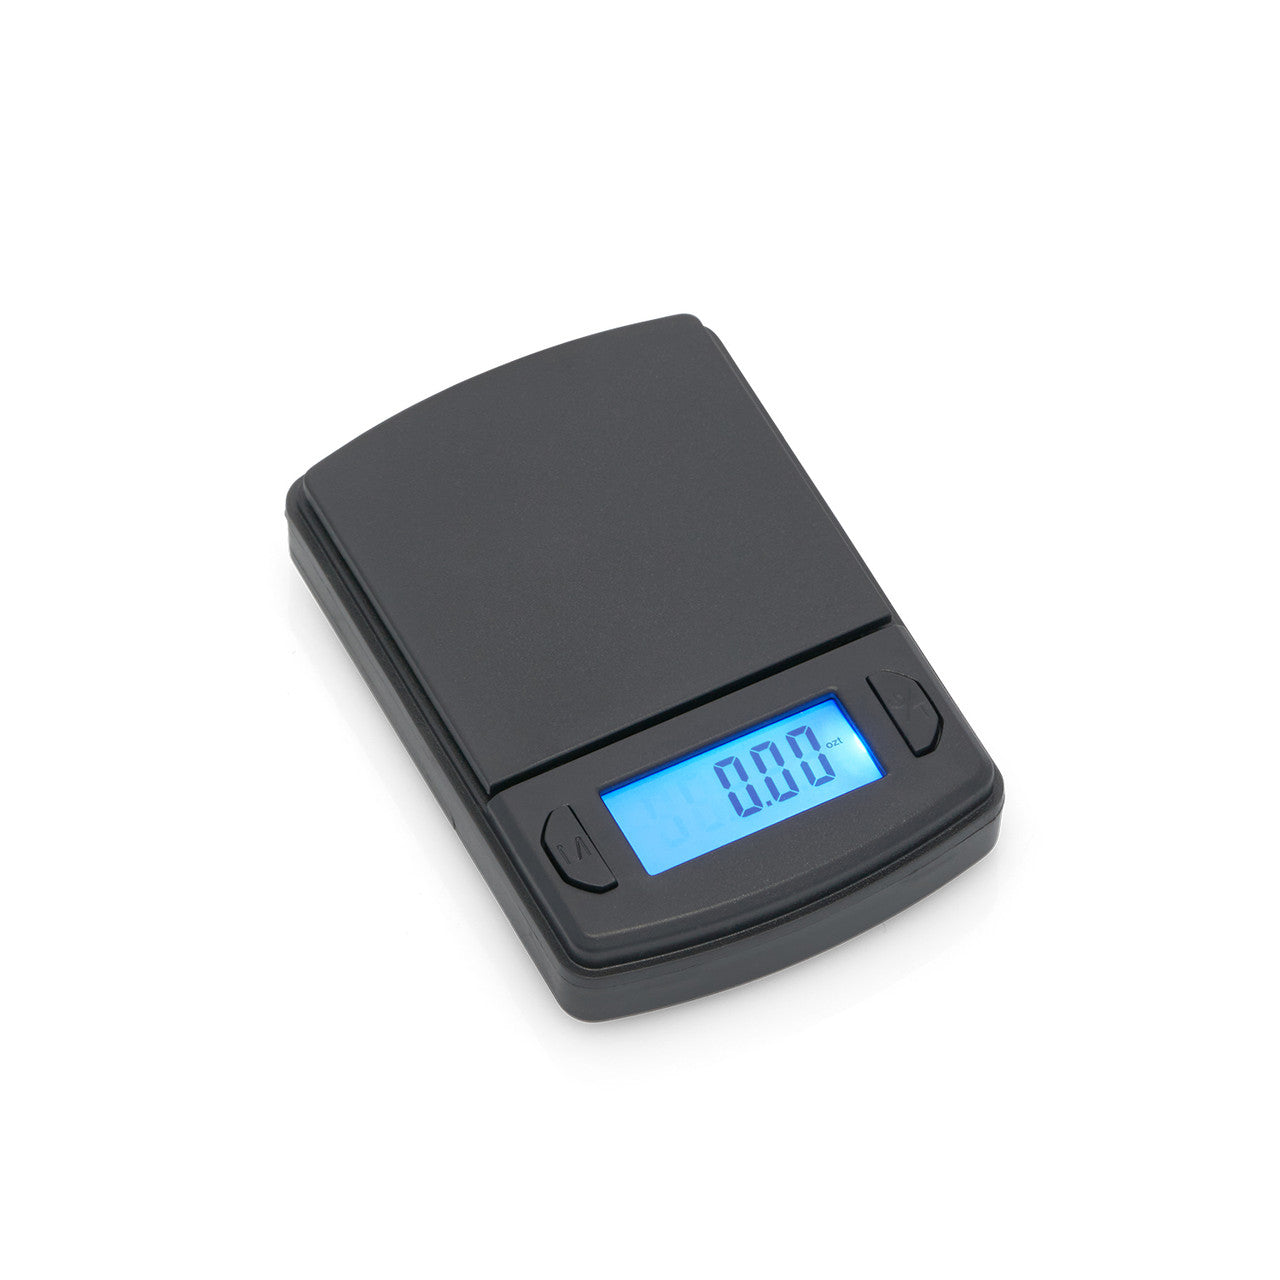 MS-600 - Digital Pocket Scale (600/0.1g) - MK Distro